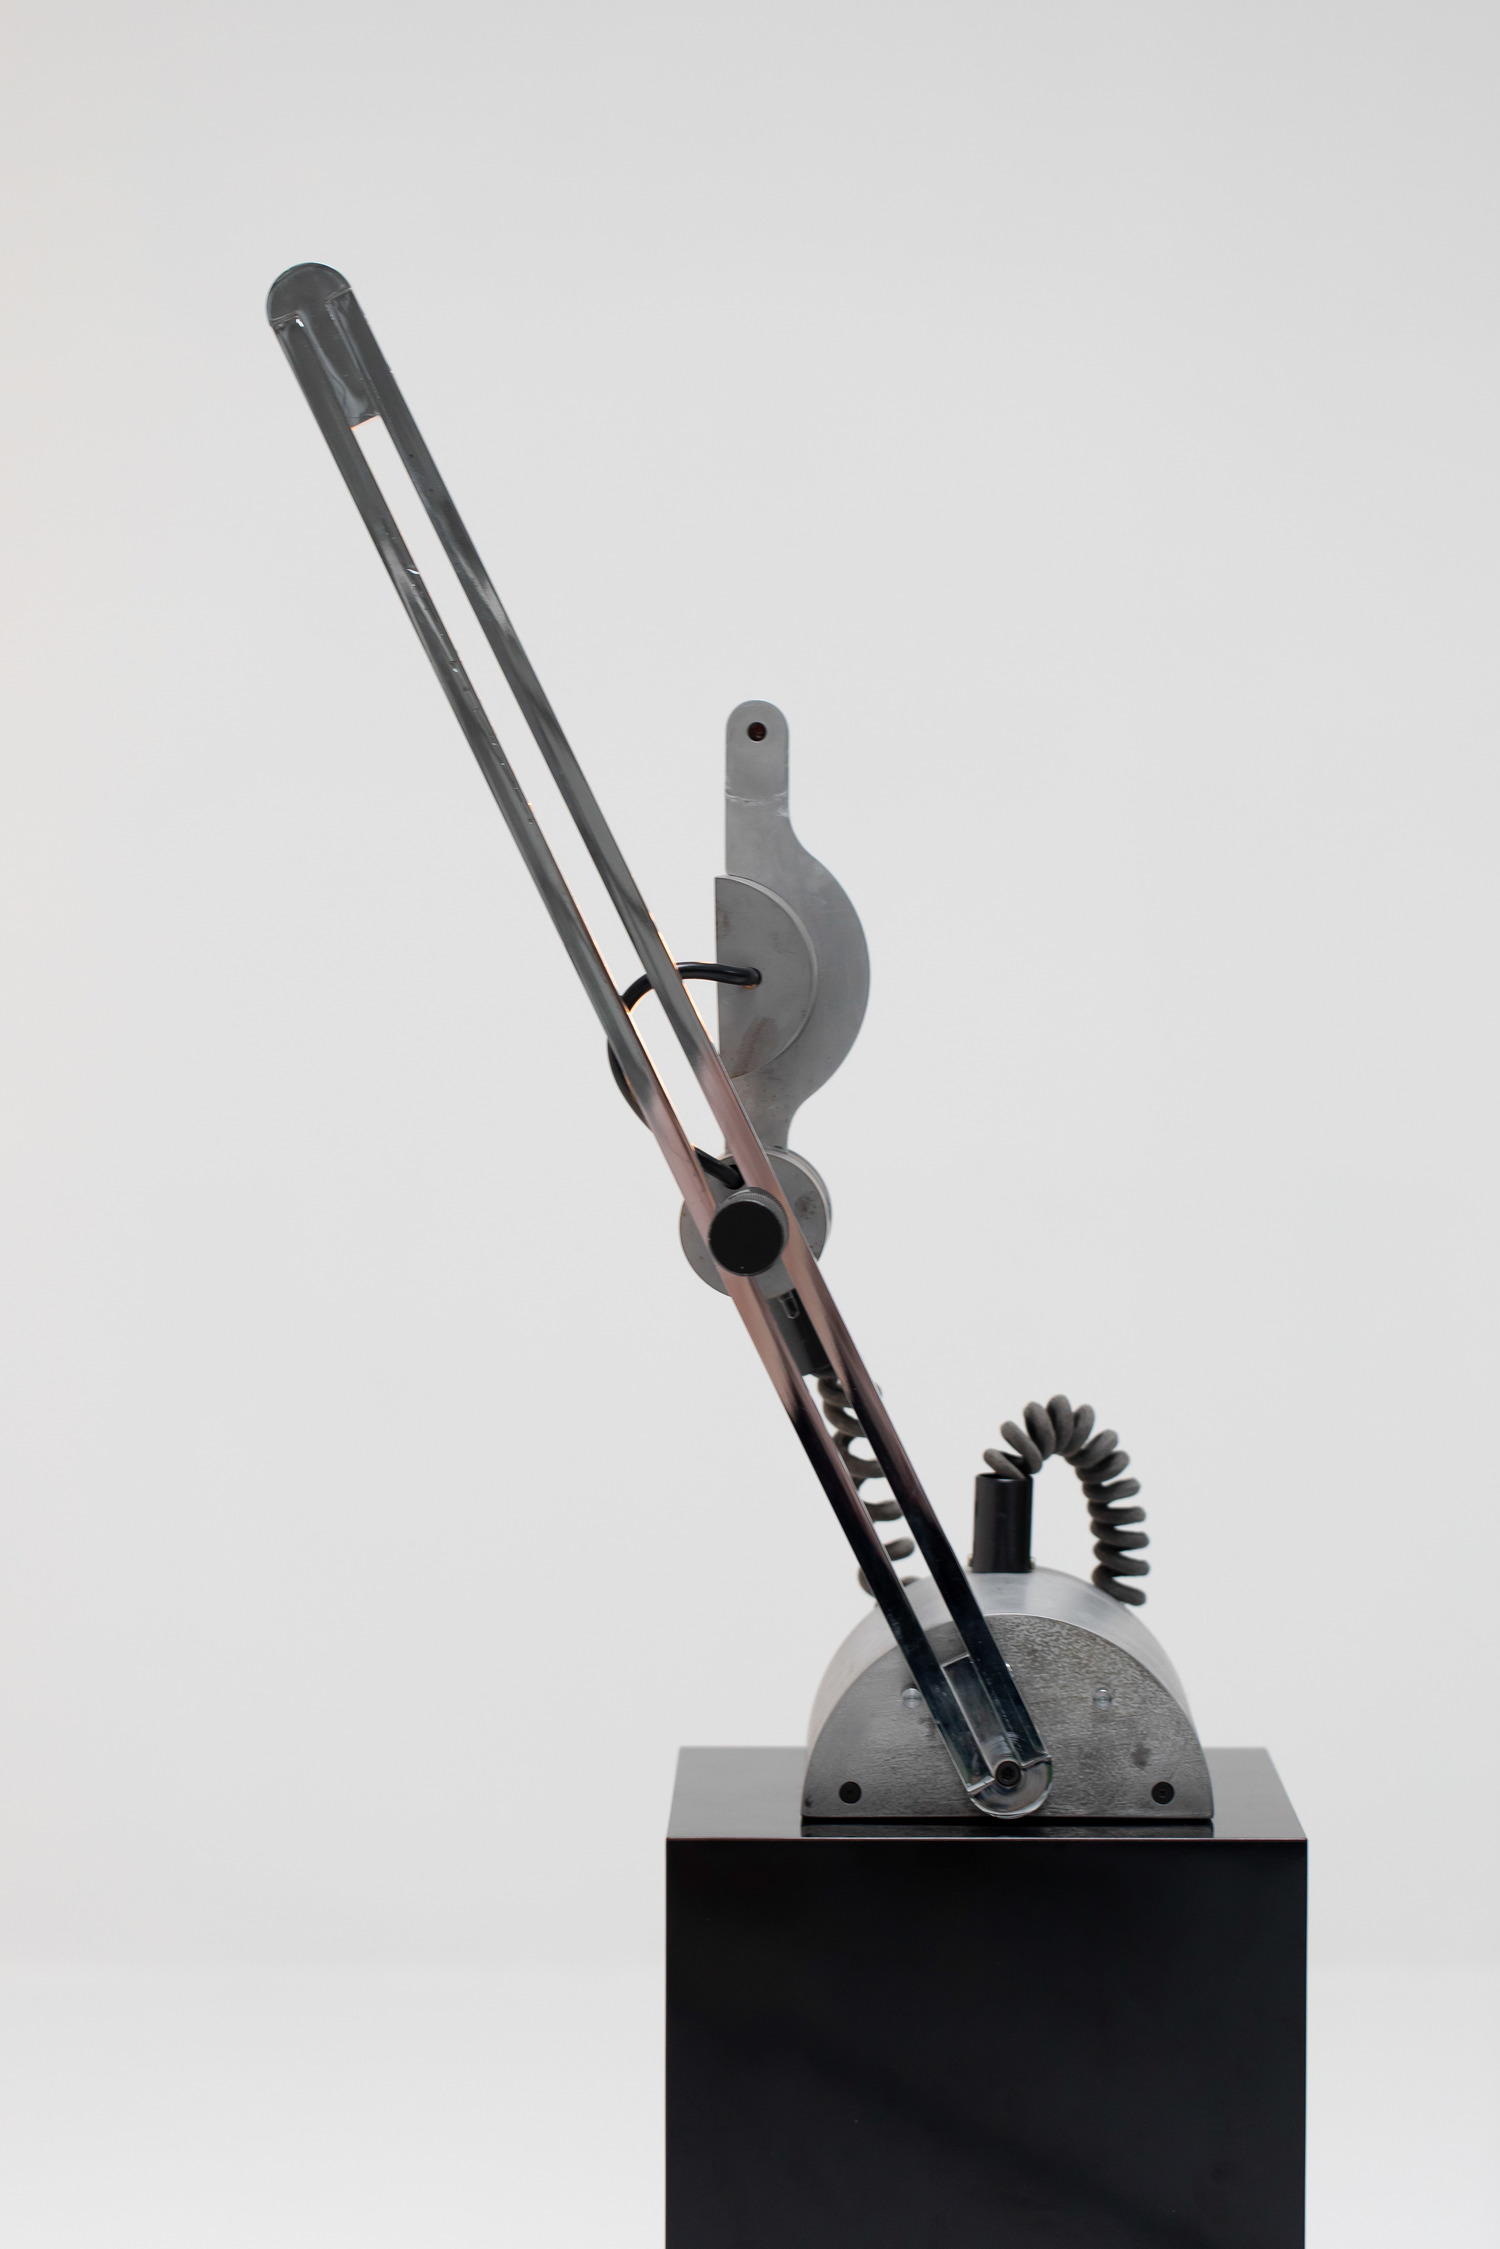 ‘Nelson’ lamp by Ignazia Favata and Claudio Dini for Bieffeplast